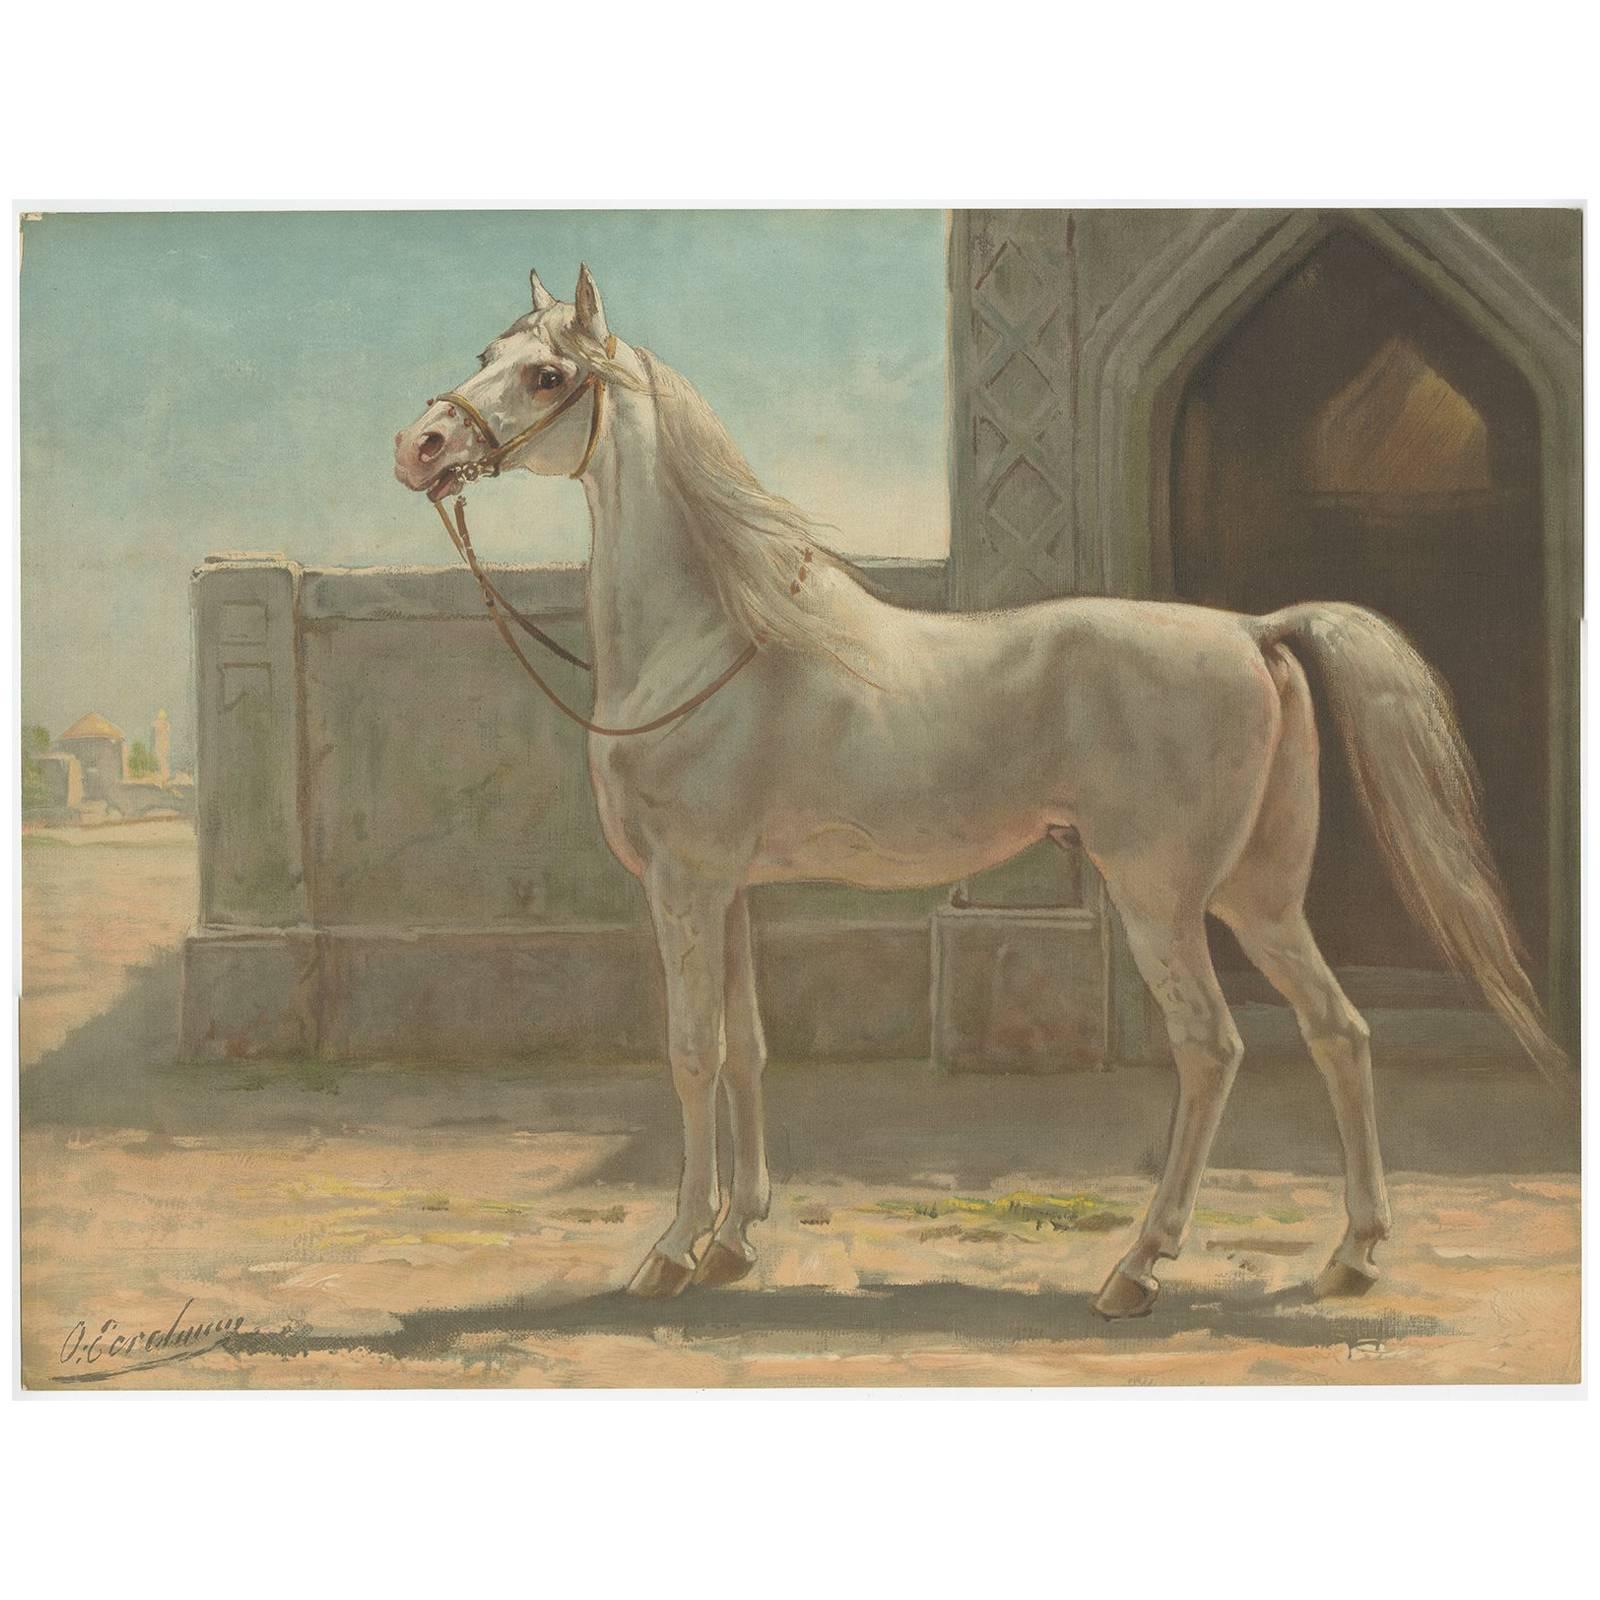 Antique Print of a Persian Horse by O. Eerelman, 1898